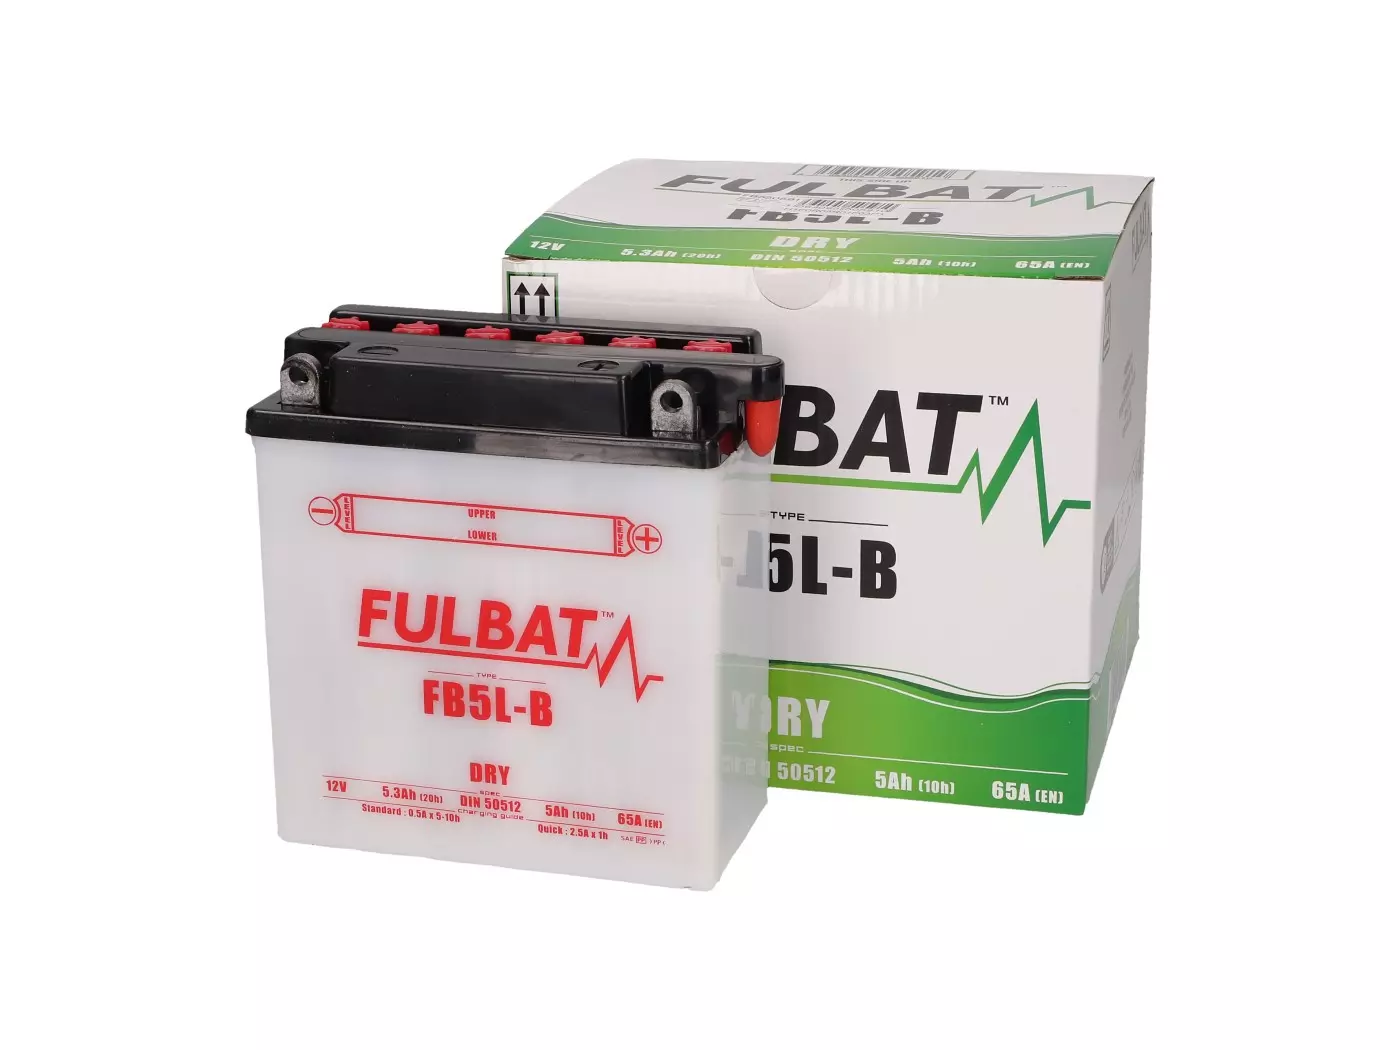 Battery Fulbat FB5L-B DRY Incl. Acid Pack